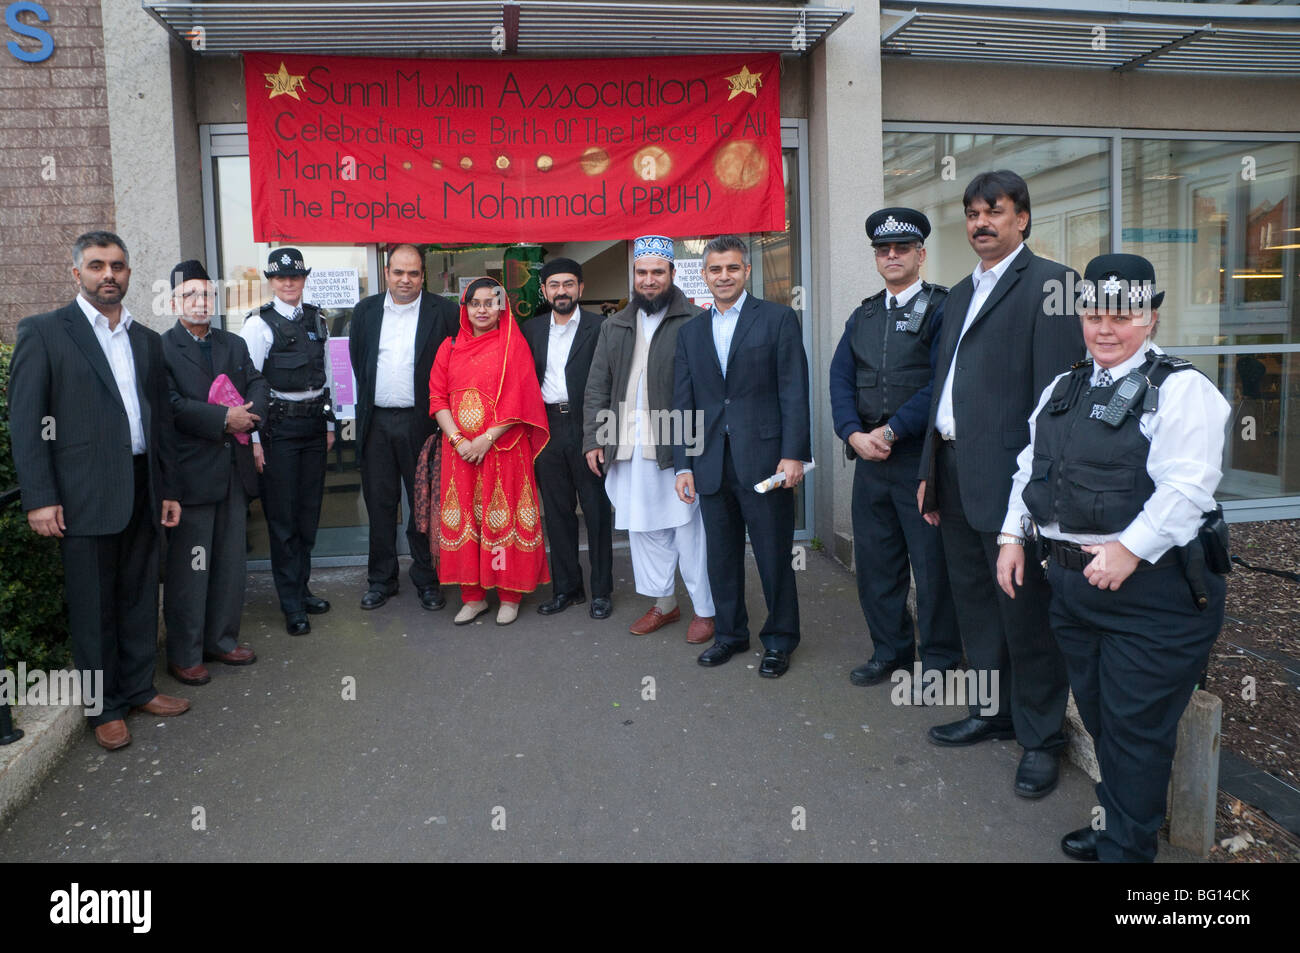 Community leaders outside Eid Milad-Un-Nabi Celebrations at Sunni Muslim Association, Tooting, London. Stock Photo